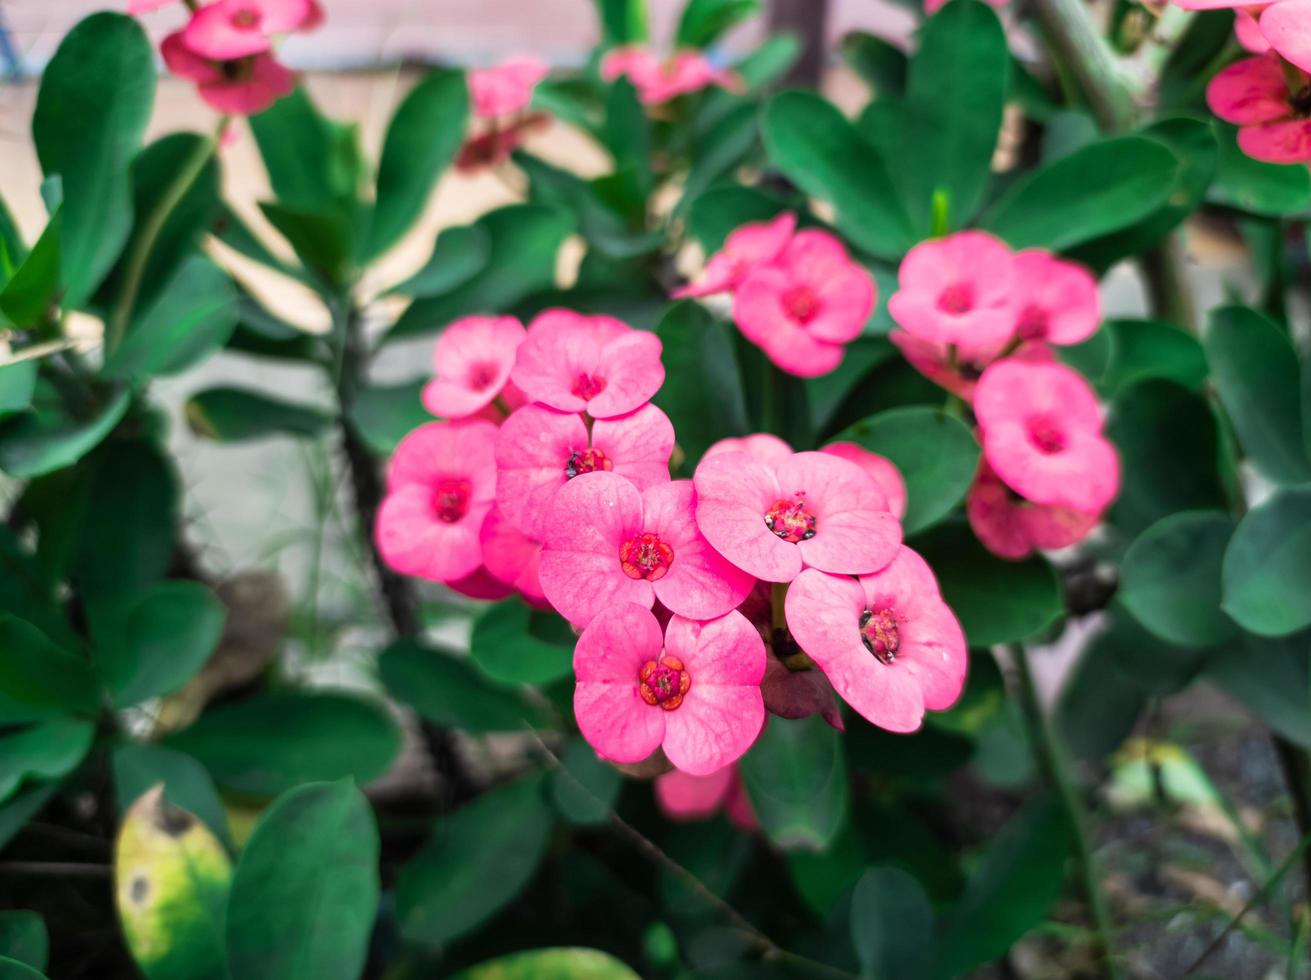 Rosa eufórbio flor ornamental plantas dentro a jardim foto